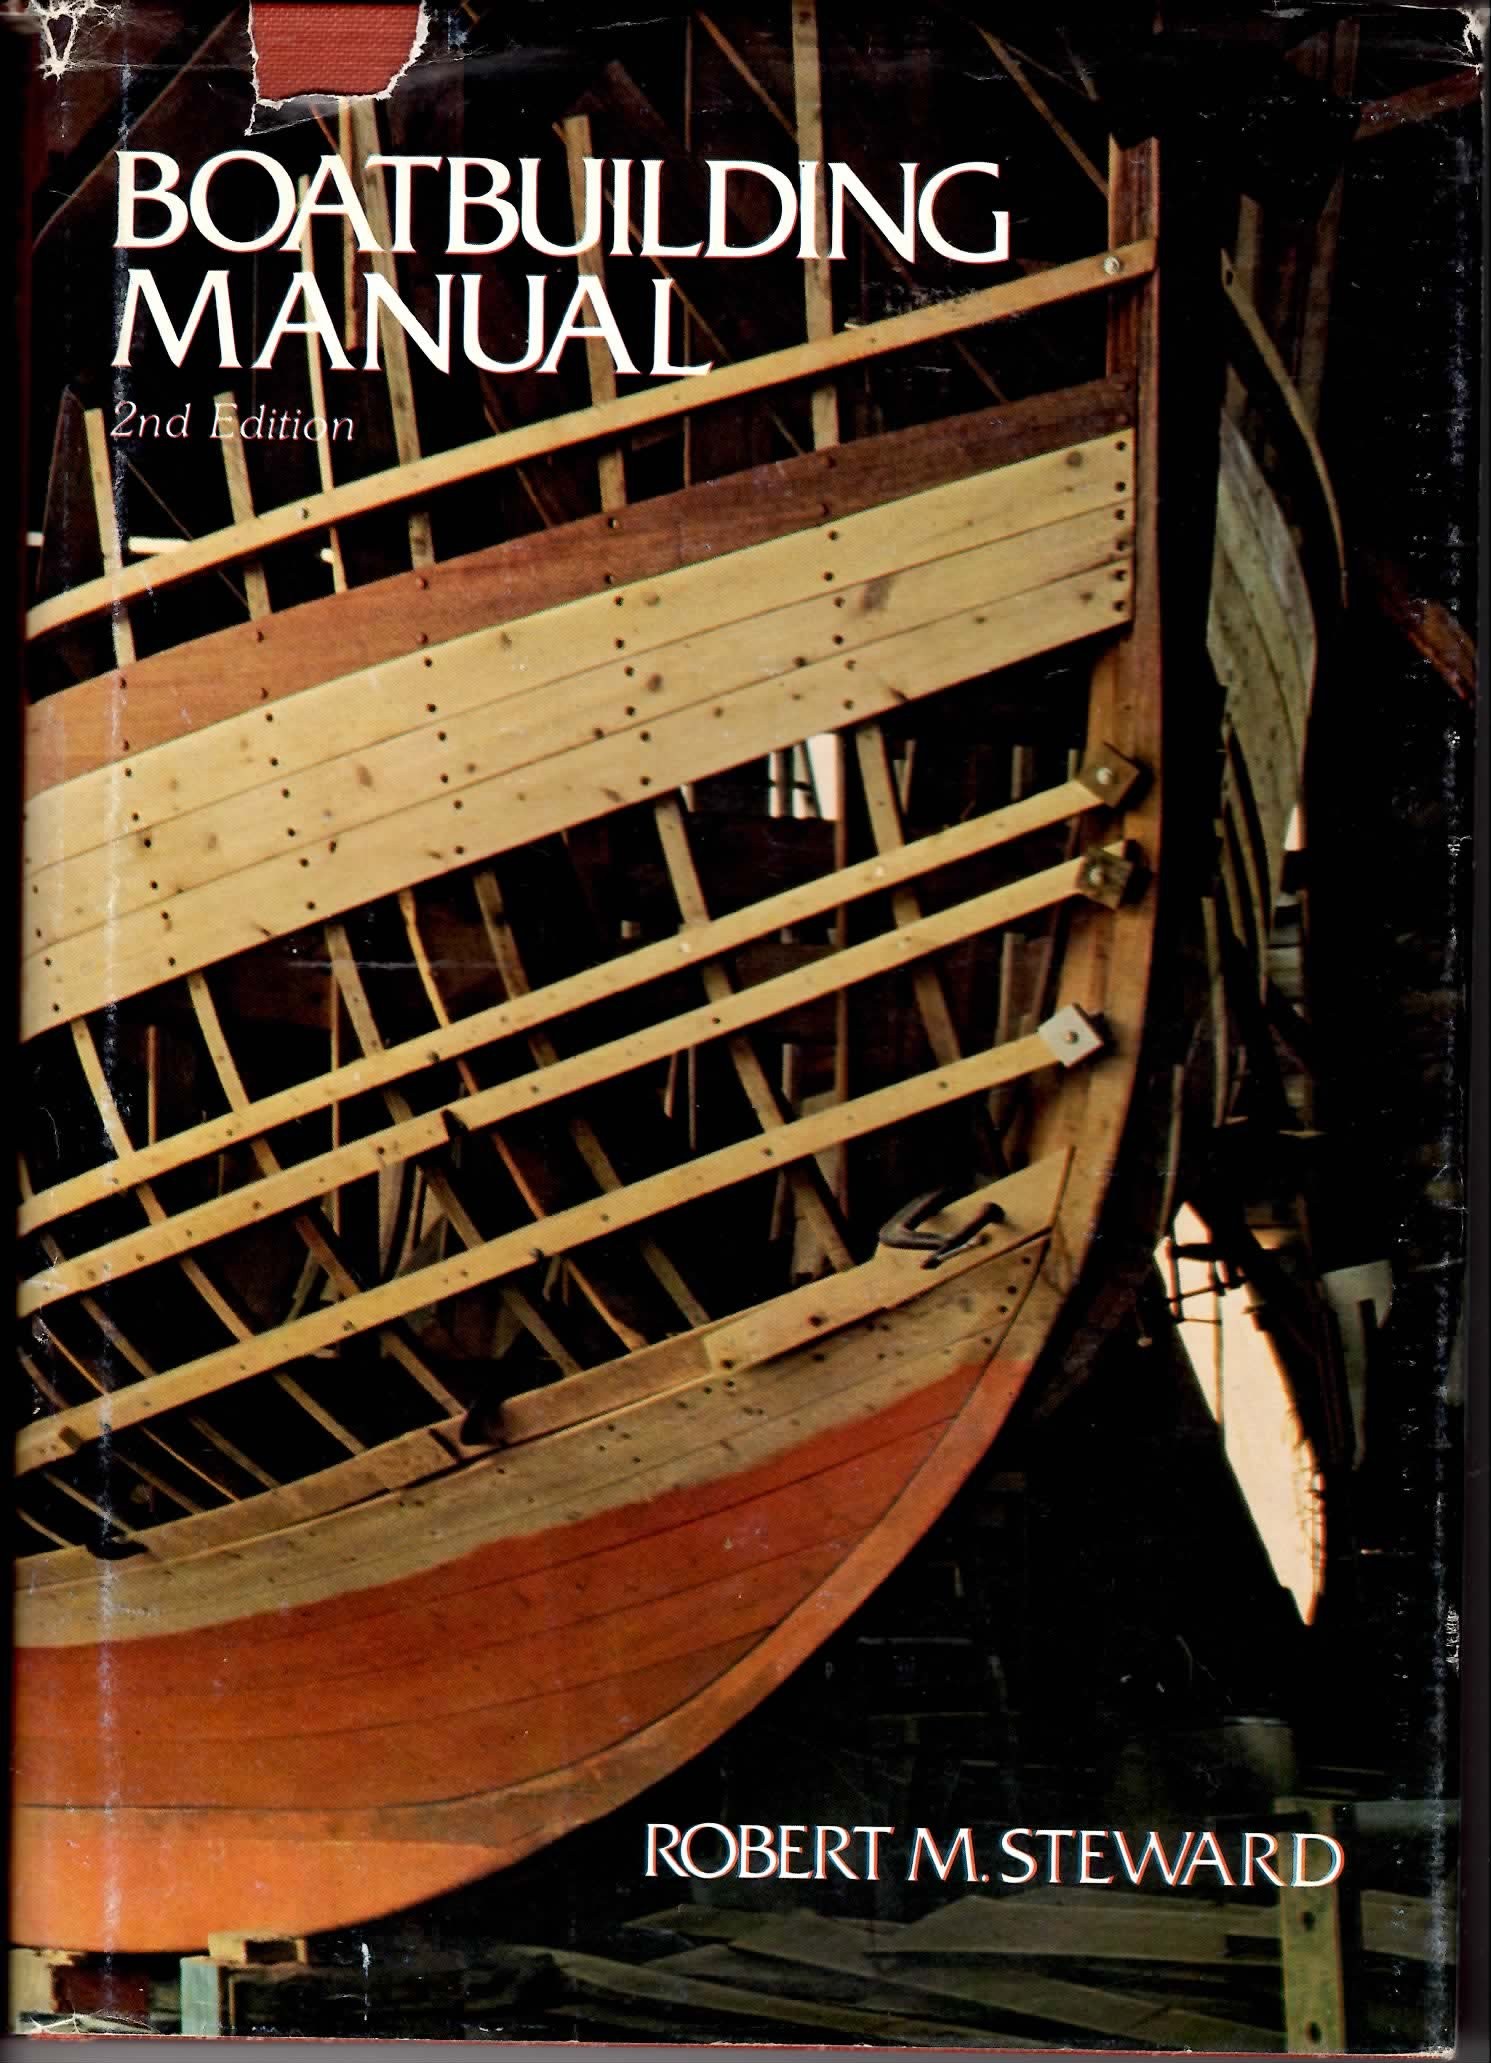 Boatbuilding Manual, Second Edition